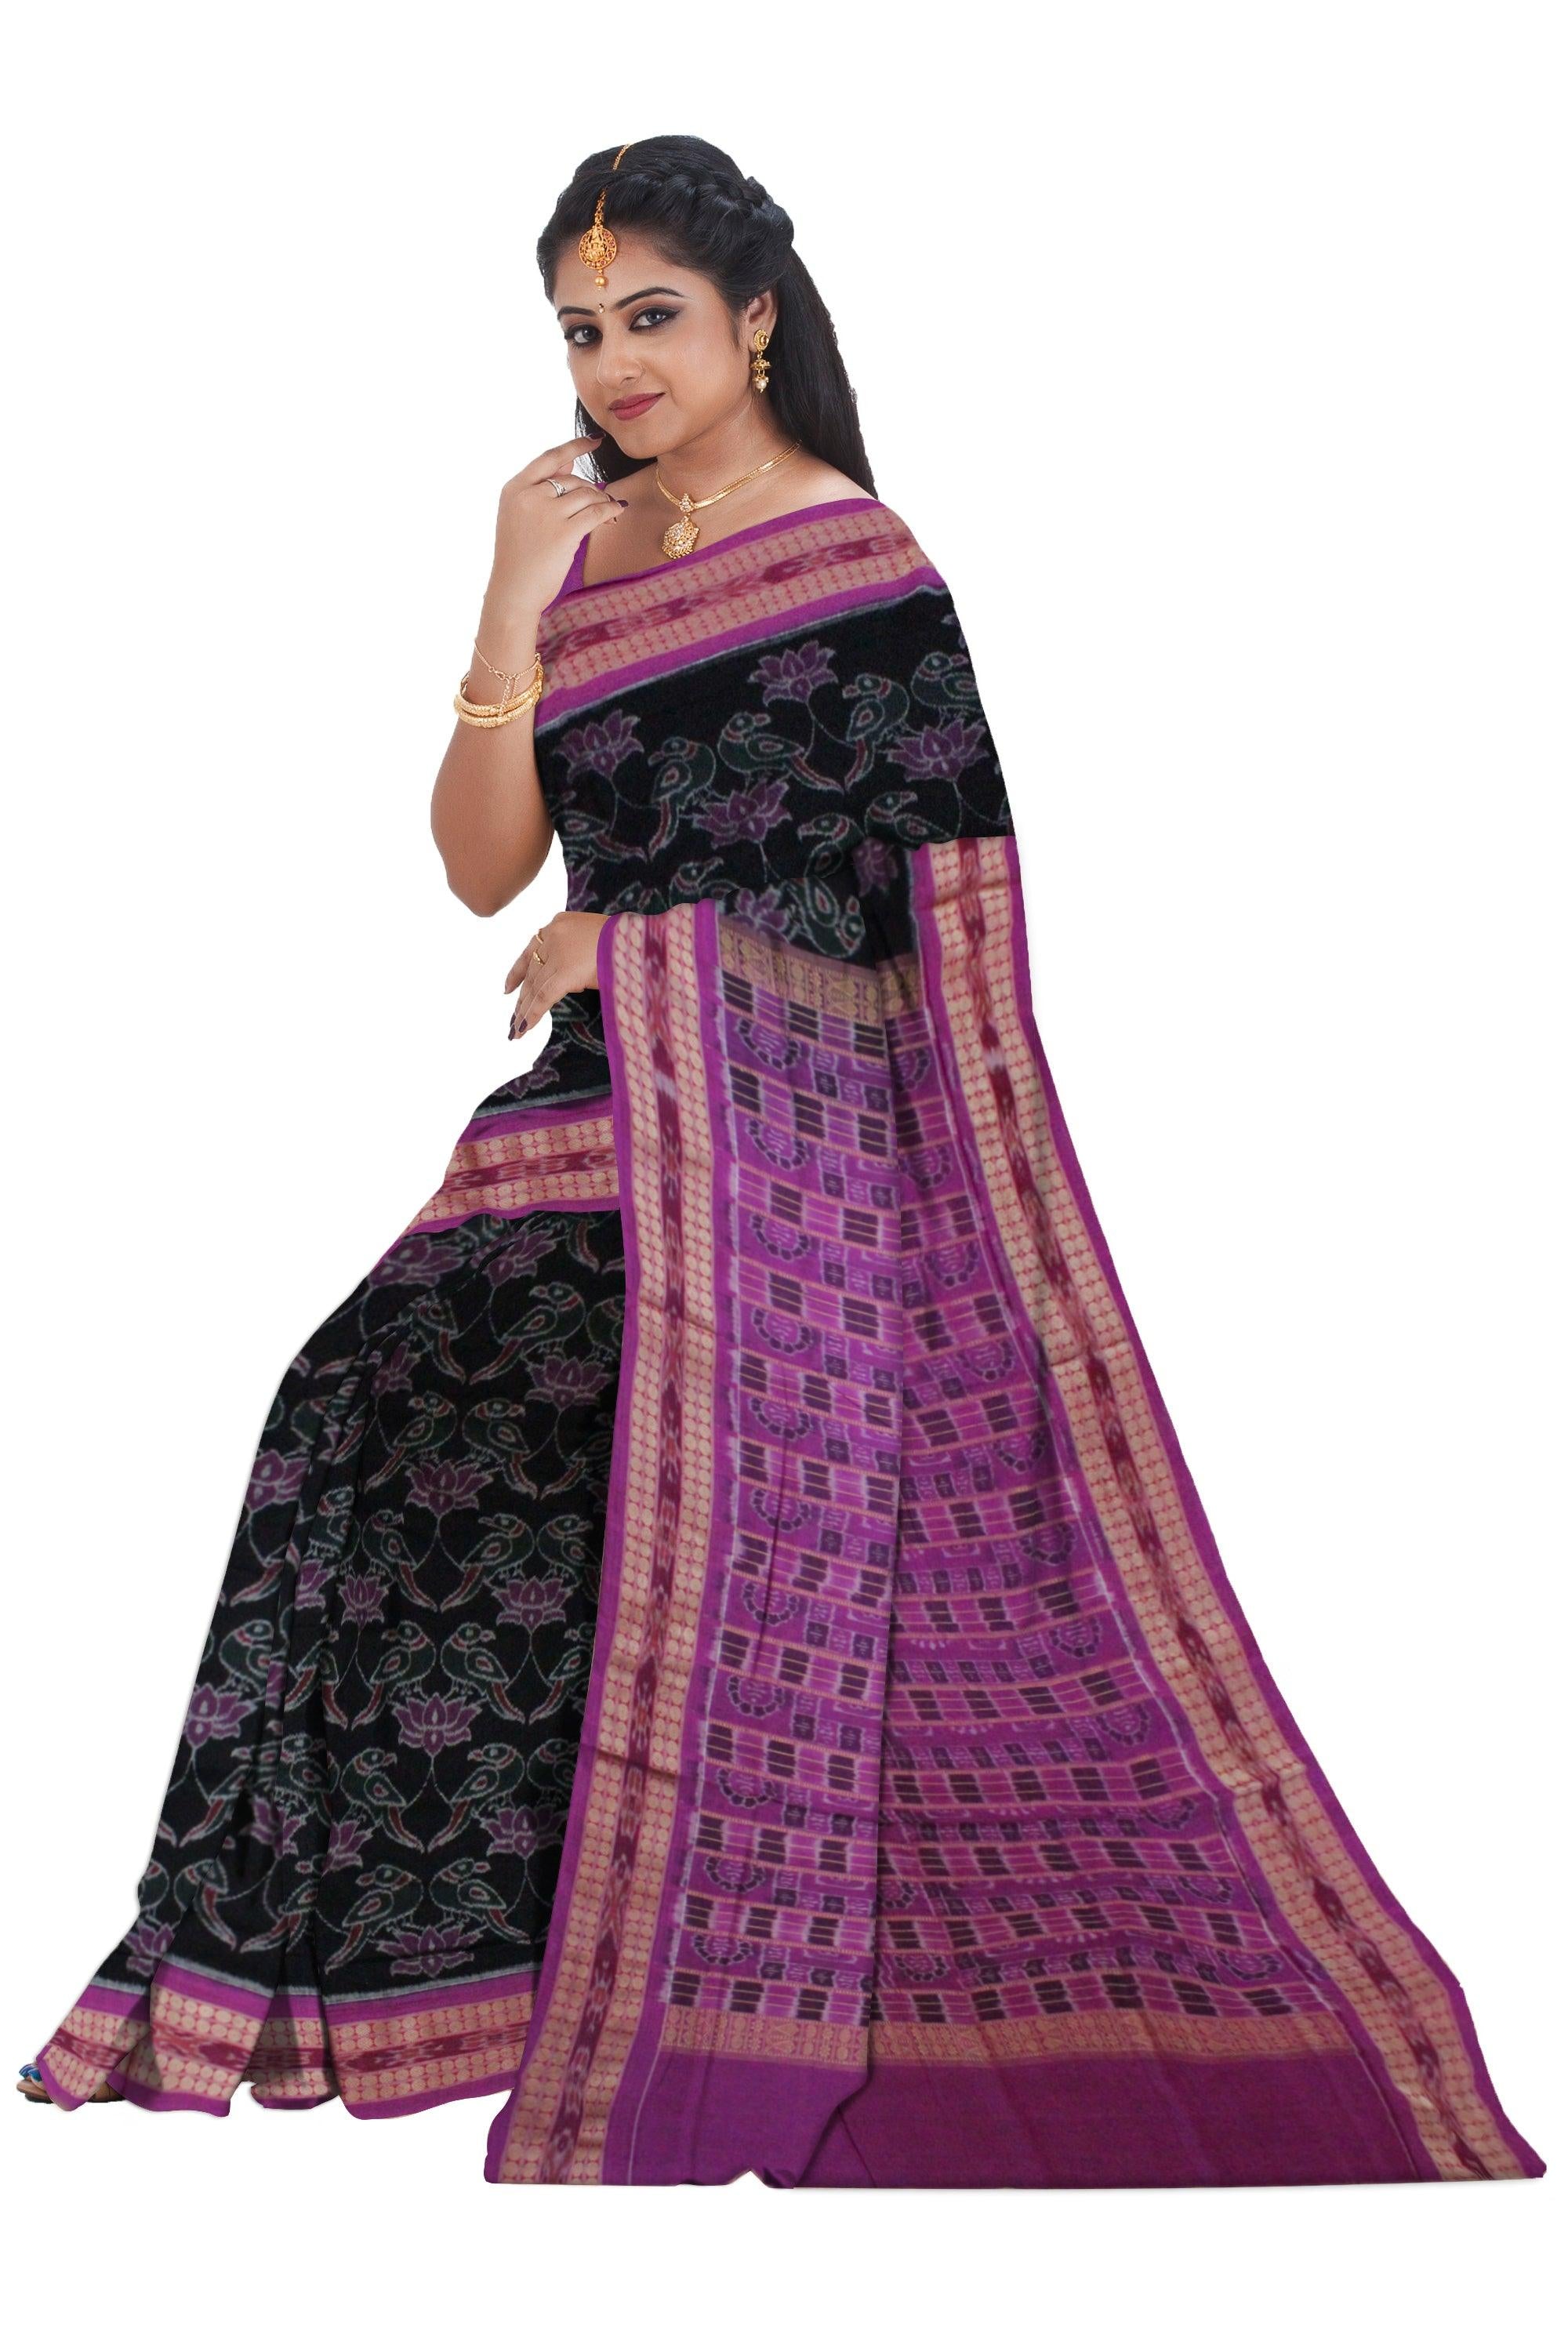 Lotus and Parrot  design Sambalpuri cotton saree  in  Black  color. - Koshali Arts & Crafts Enterprise